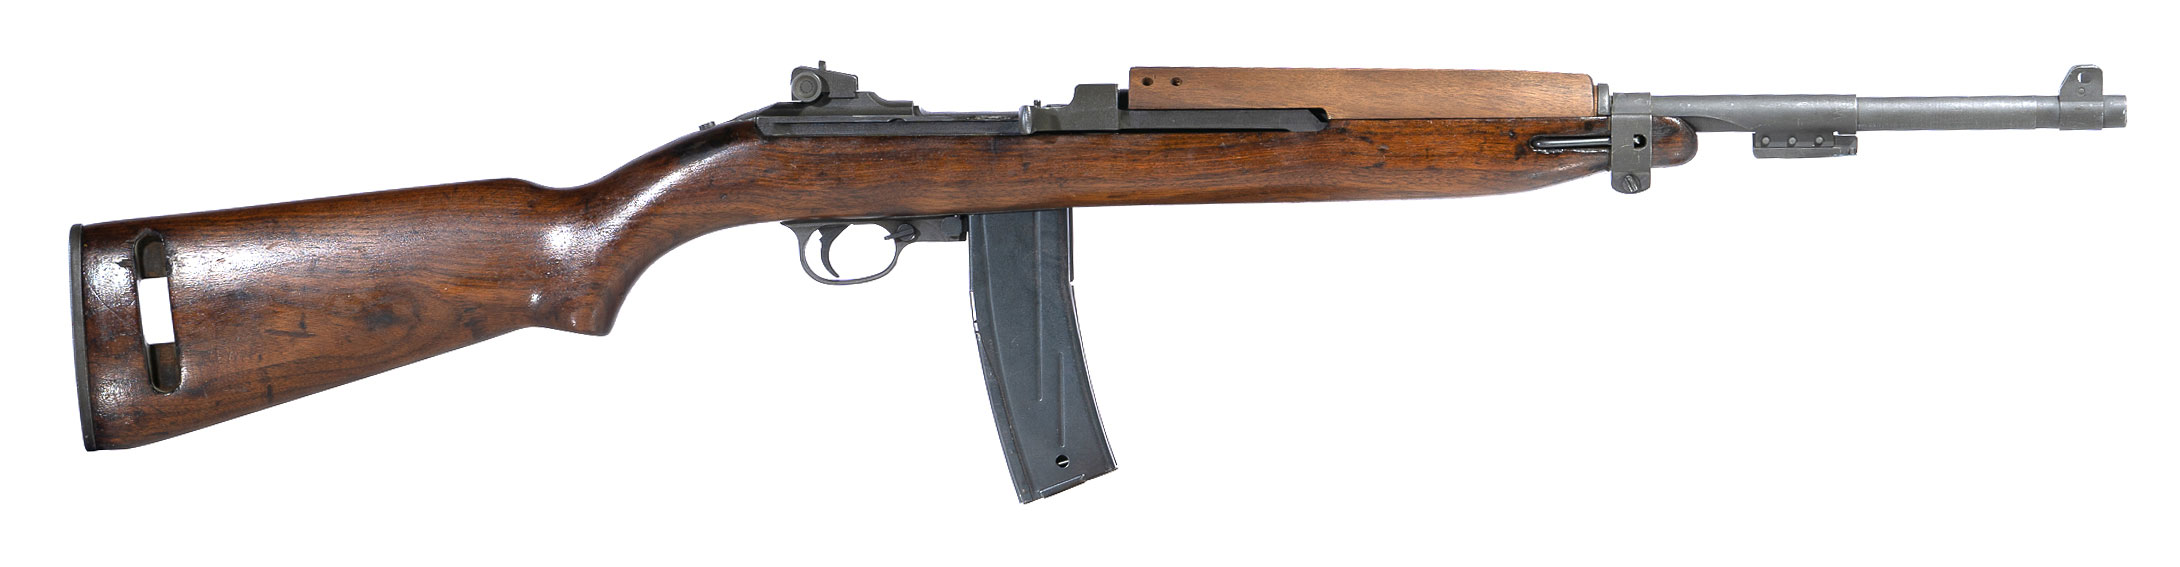 M1 Carbine .30 Carbine Rifle (code R007)-image